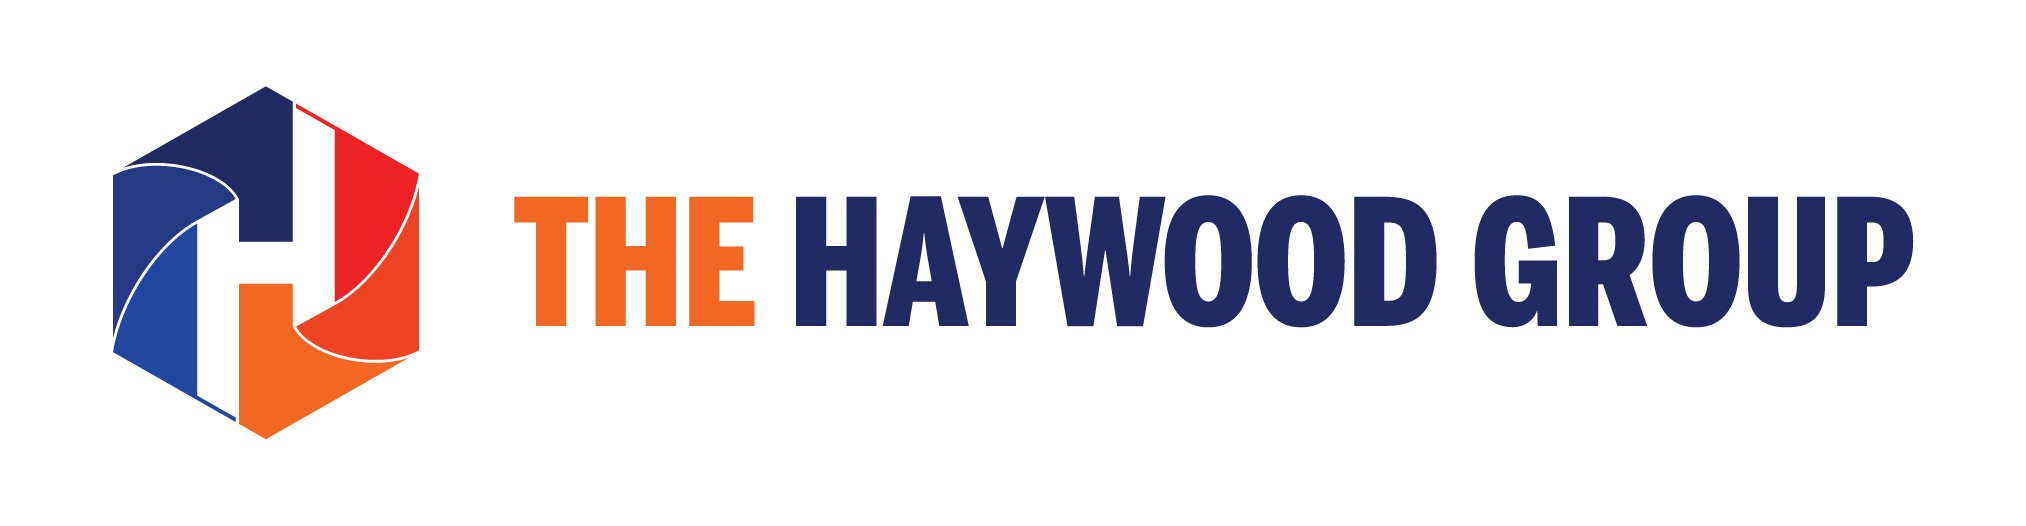 Haywood-logo_horizontal-lightbackground-l.jpg